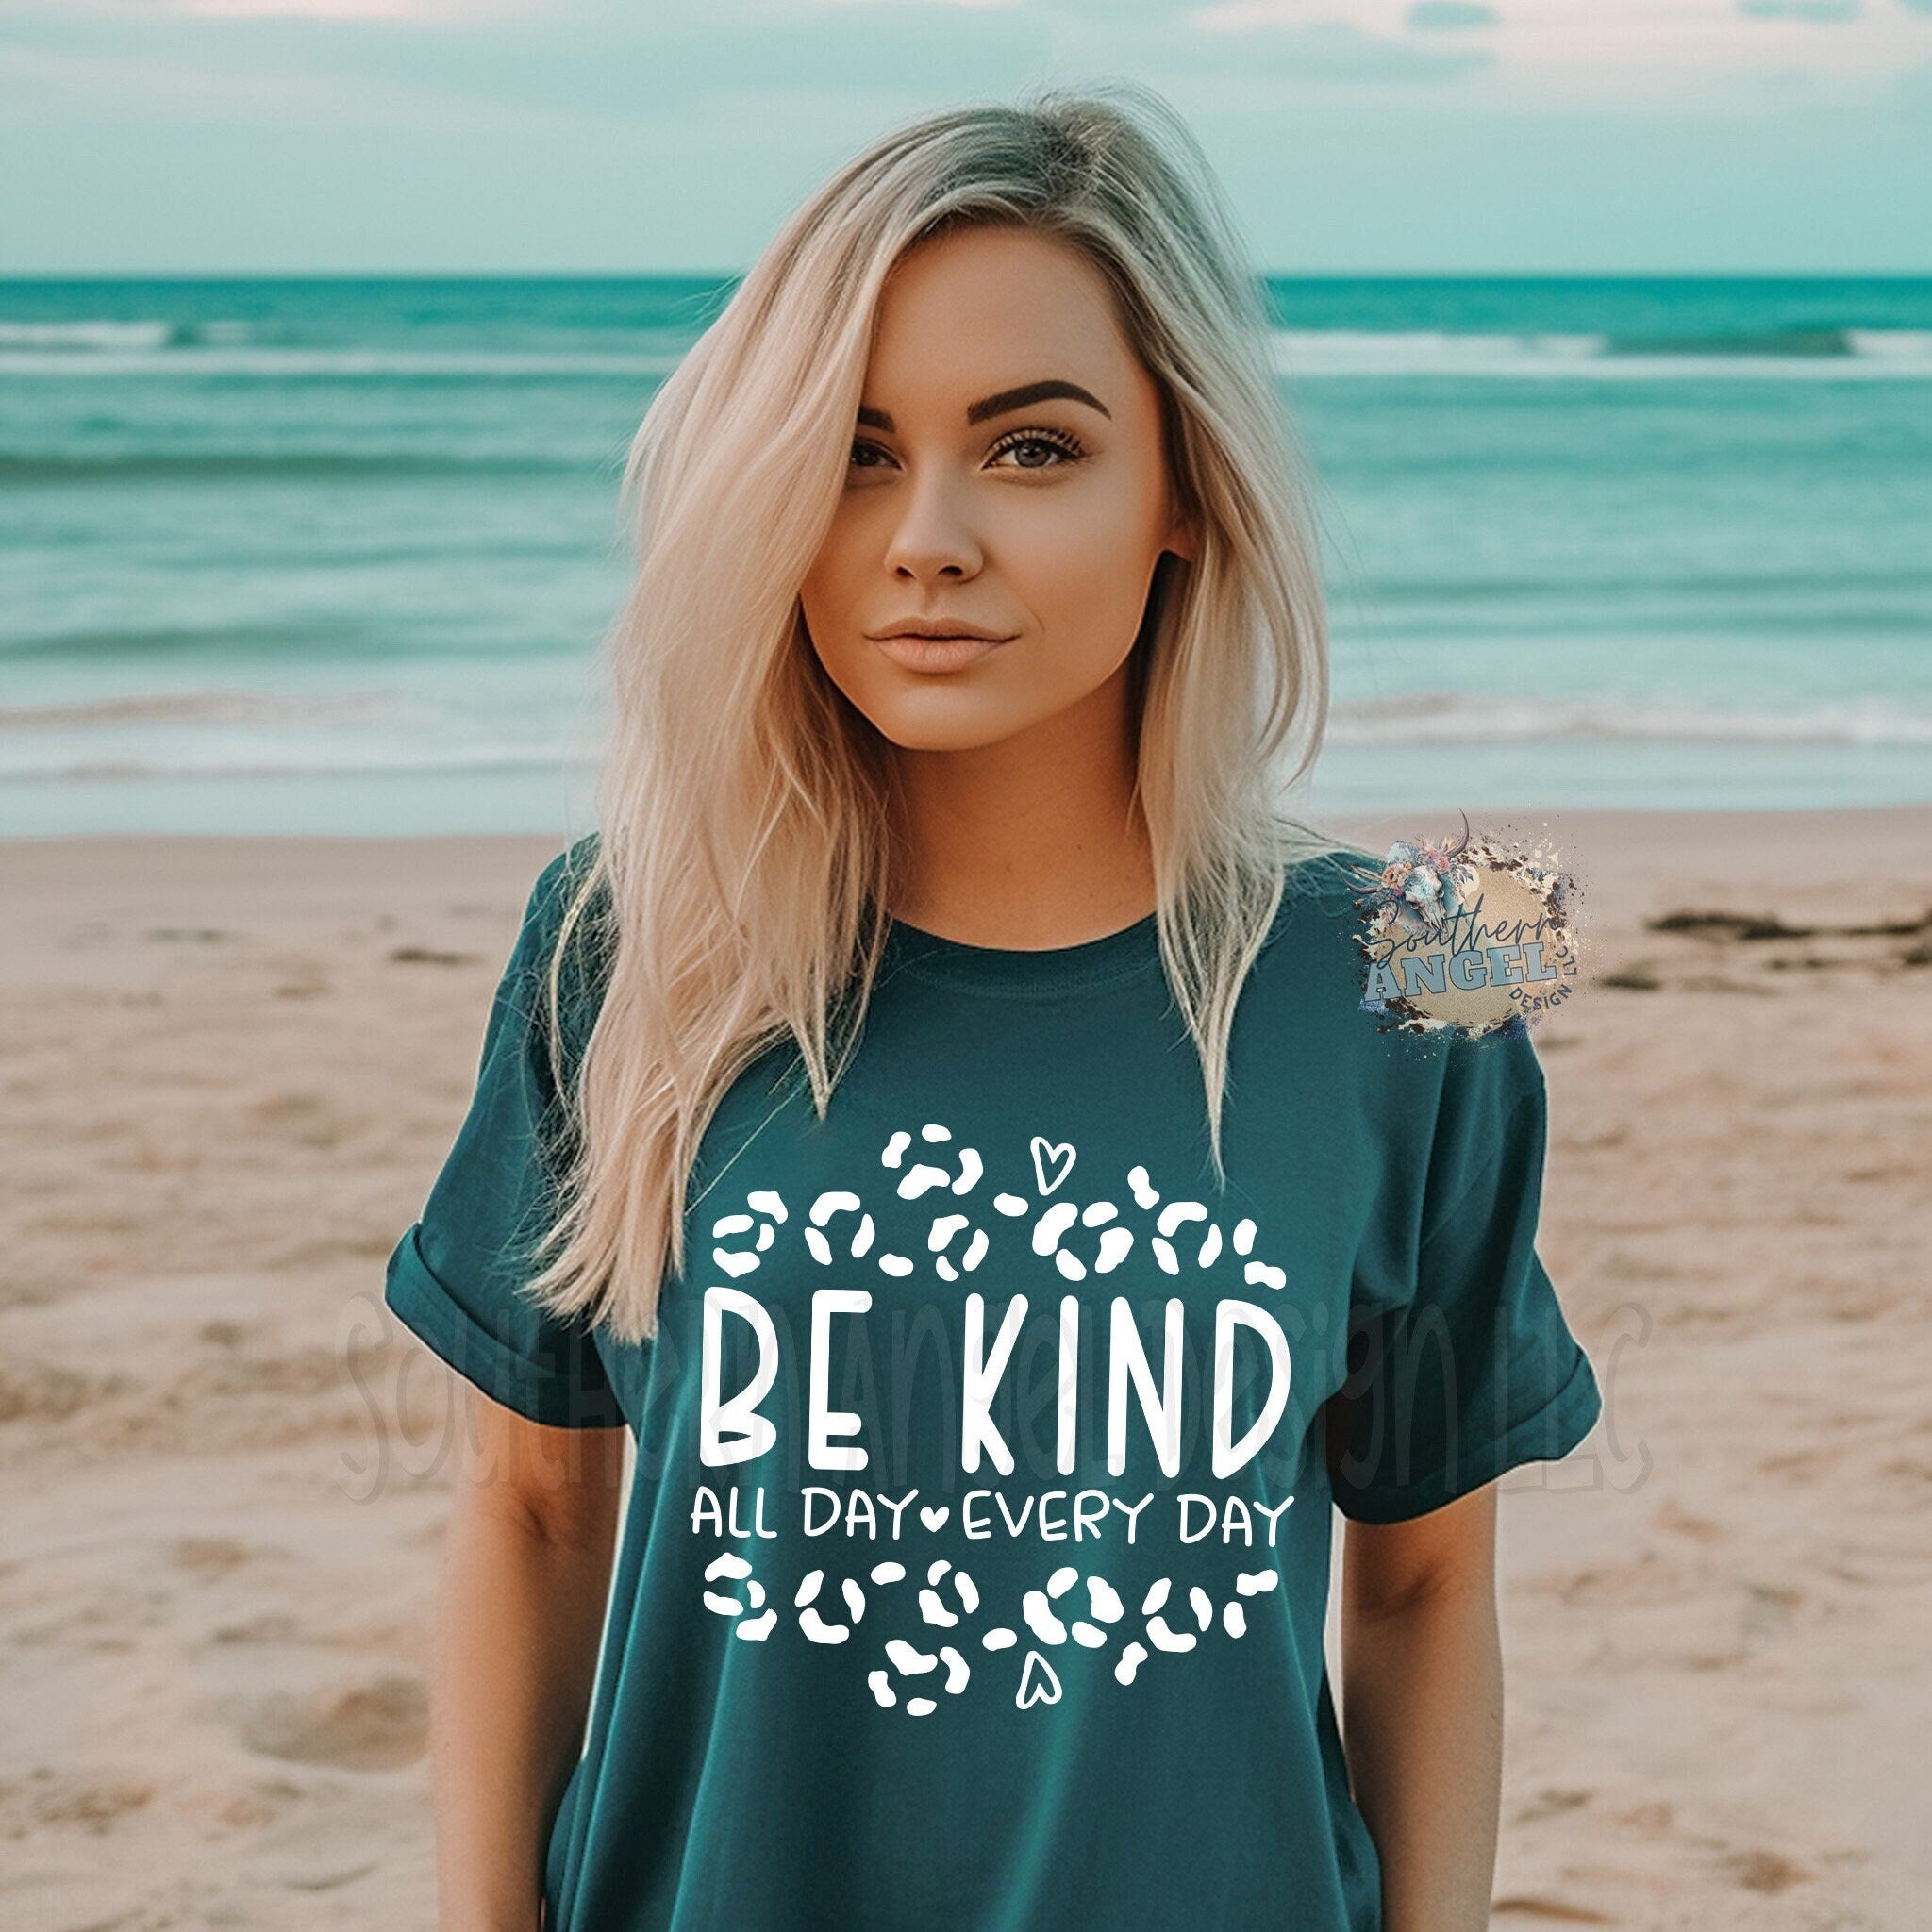 Be Kind shirt, John 3:16 shirt, Bible verse shirt, Religious shirt, Leave the judging to Jesus, Love like Jesus, Positive